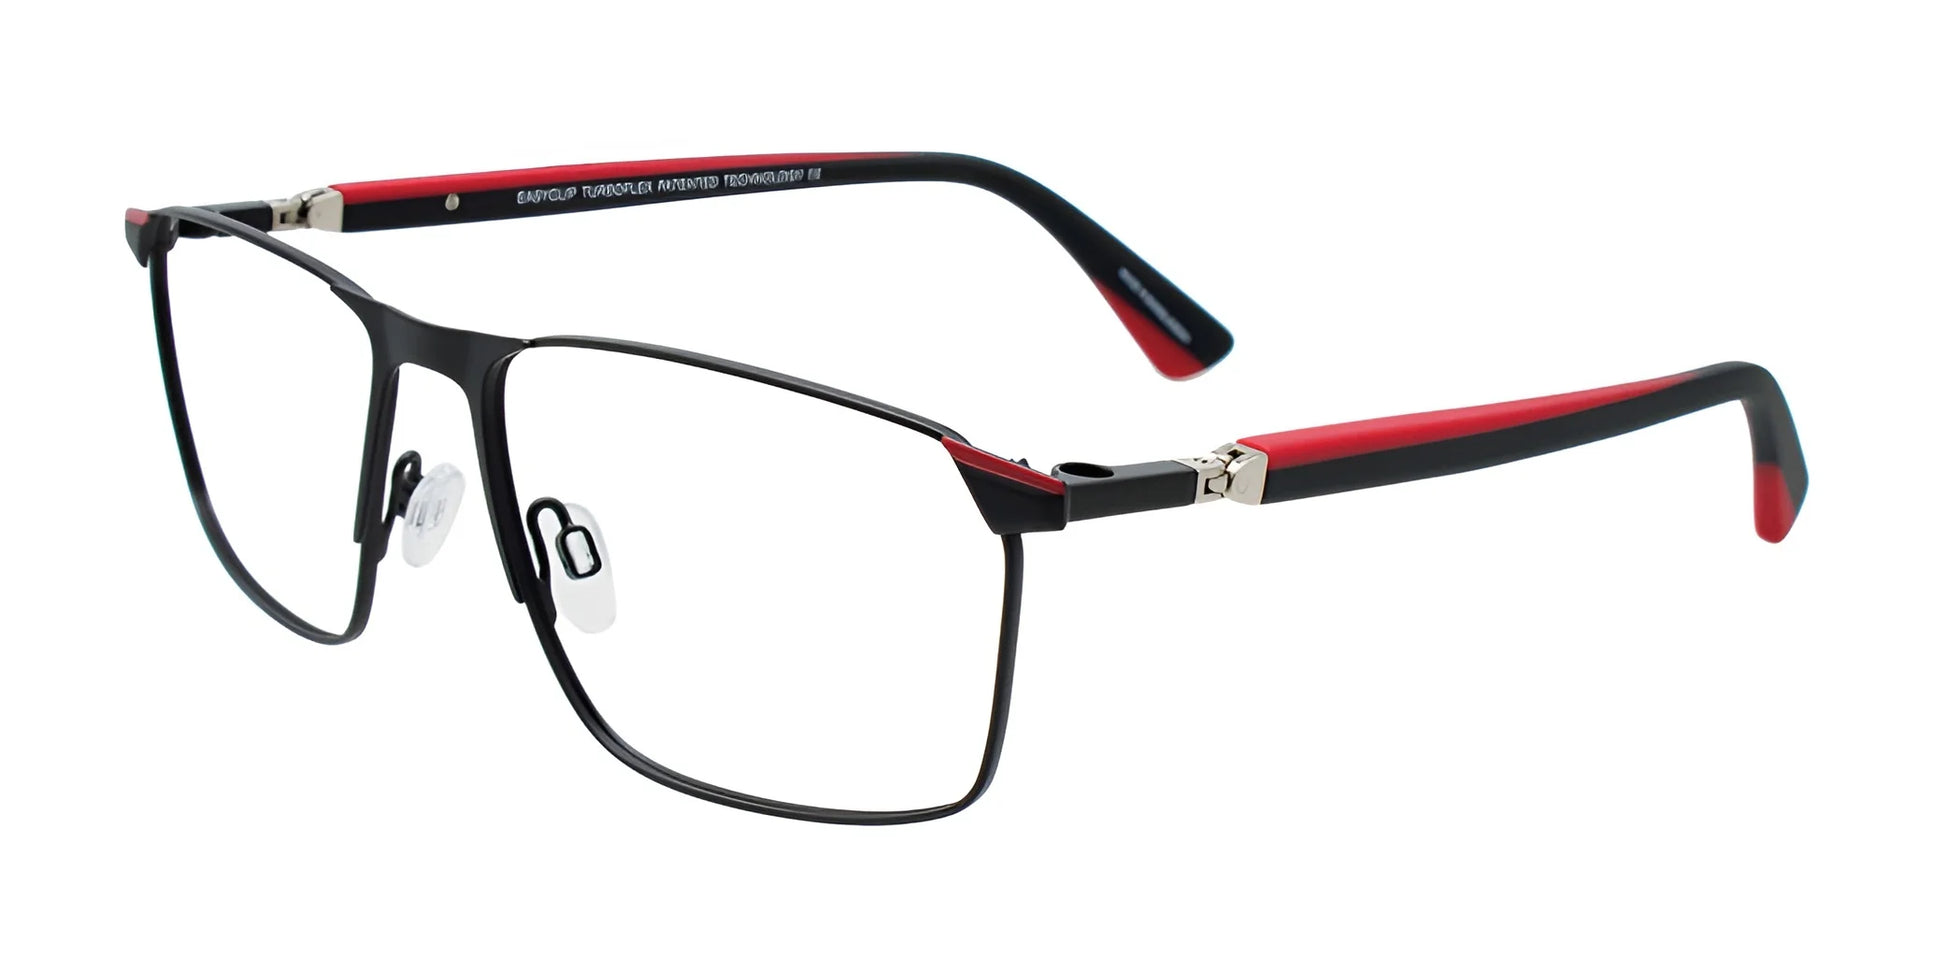 EasyClip EC652 Eyeglasses with Clip-on Sunglasses Black & Red